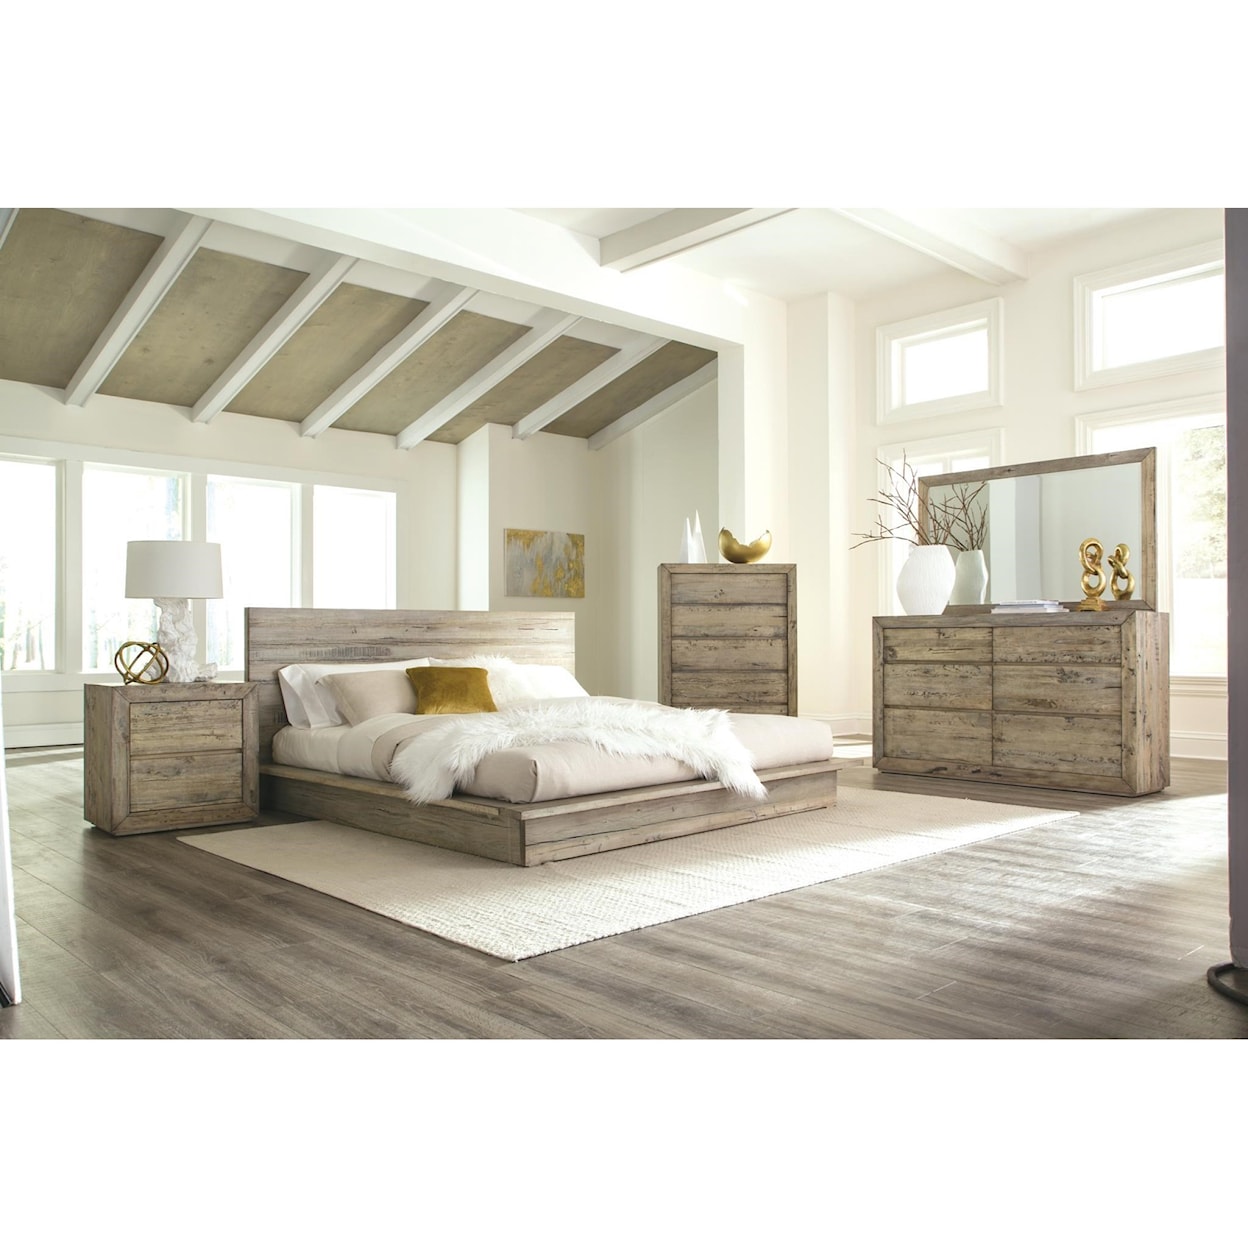 Napa Furniture Designs Renewal King Bedroom Group